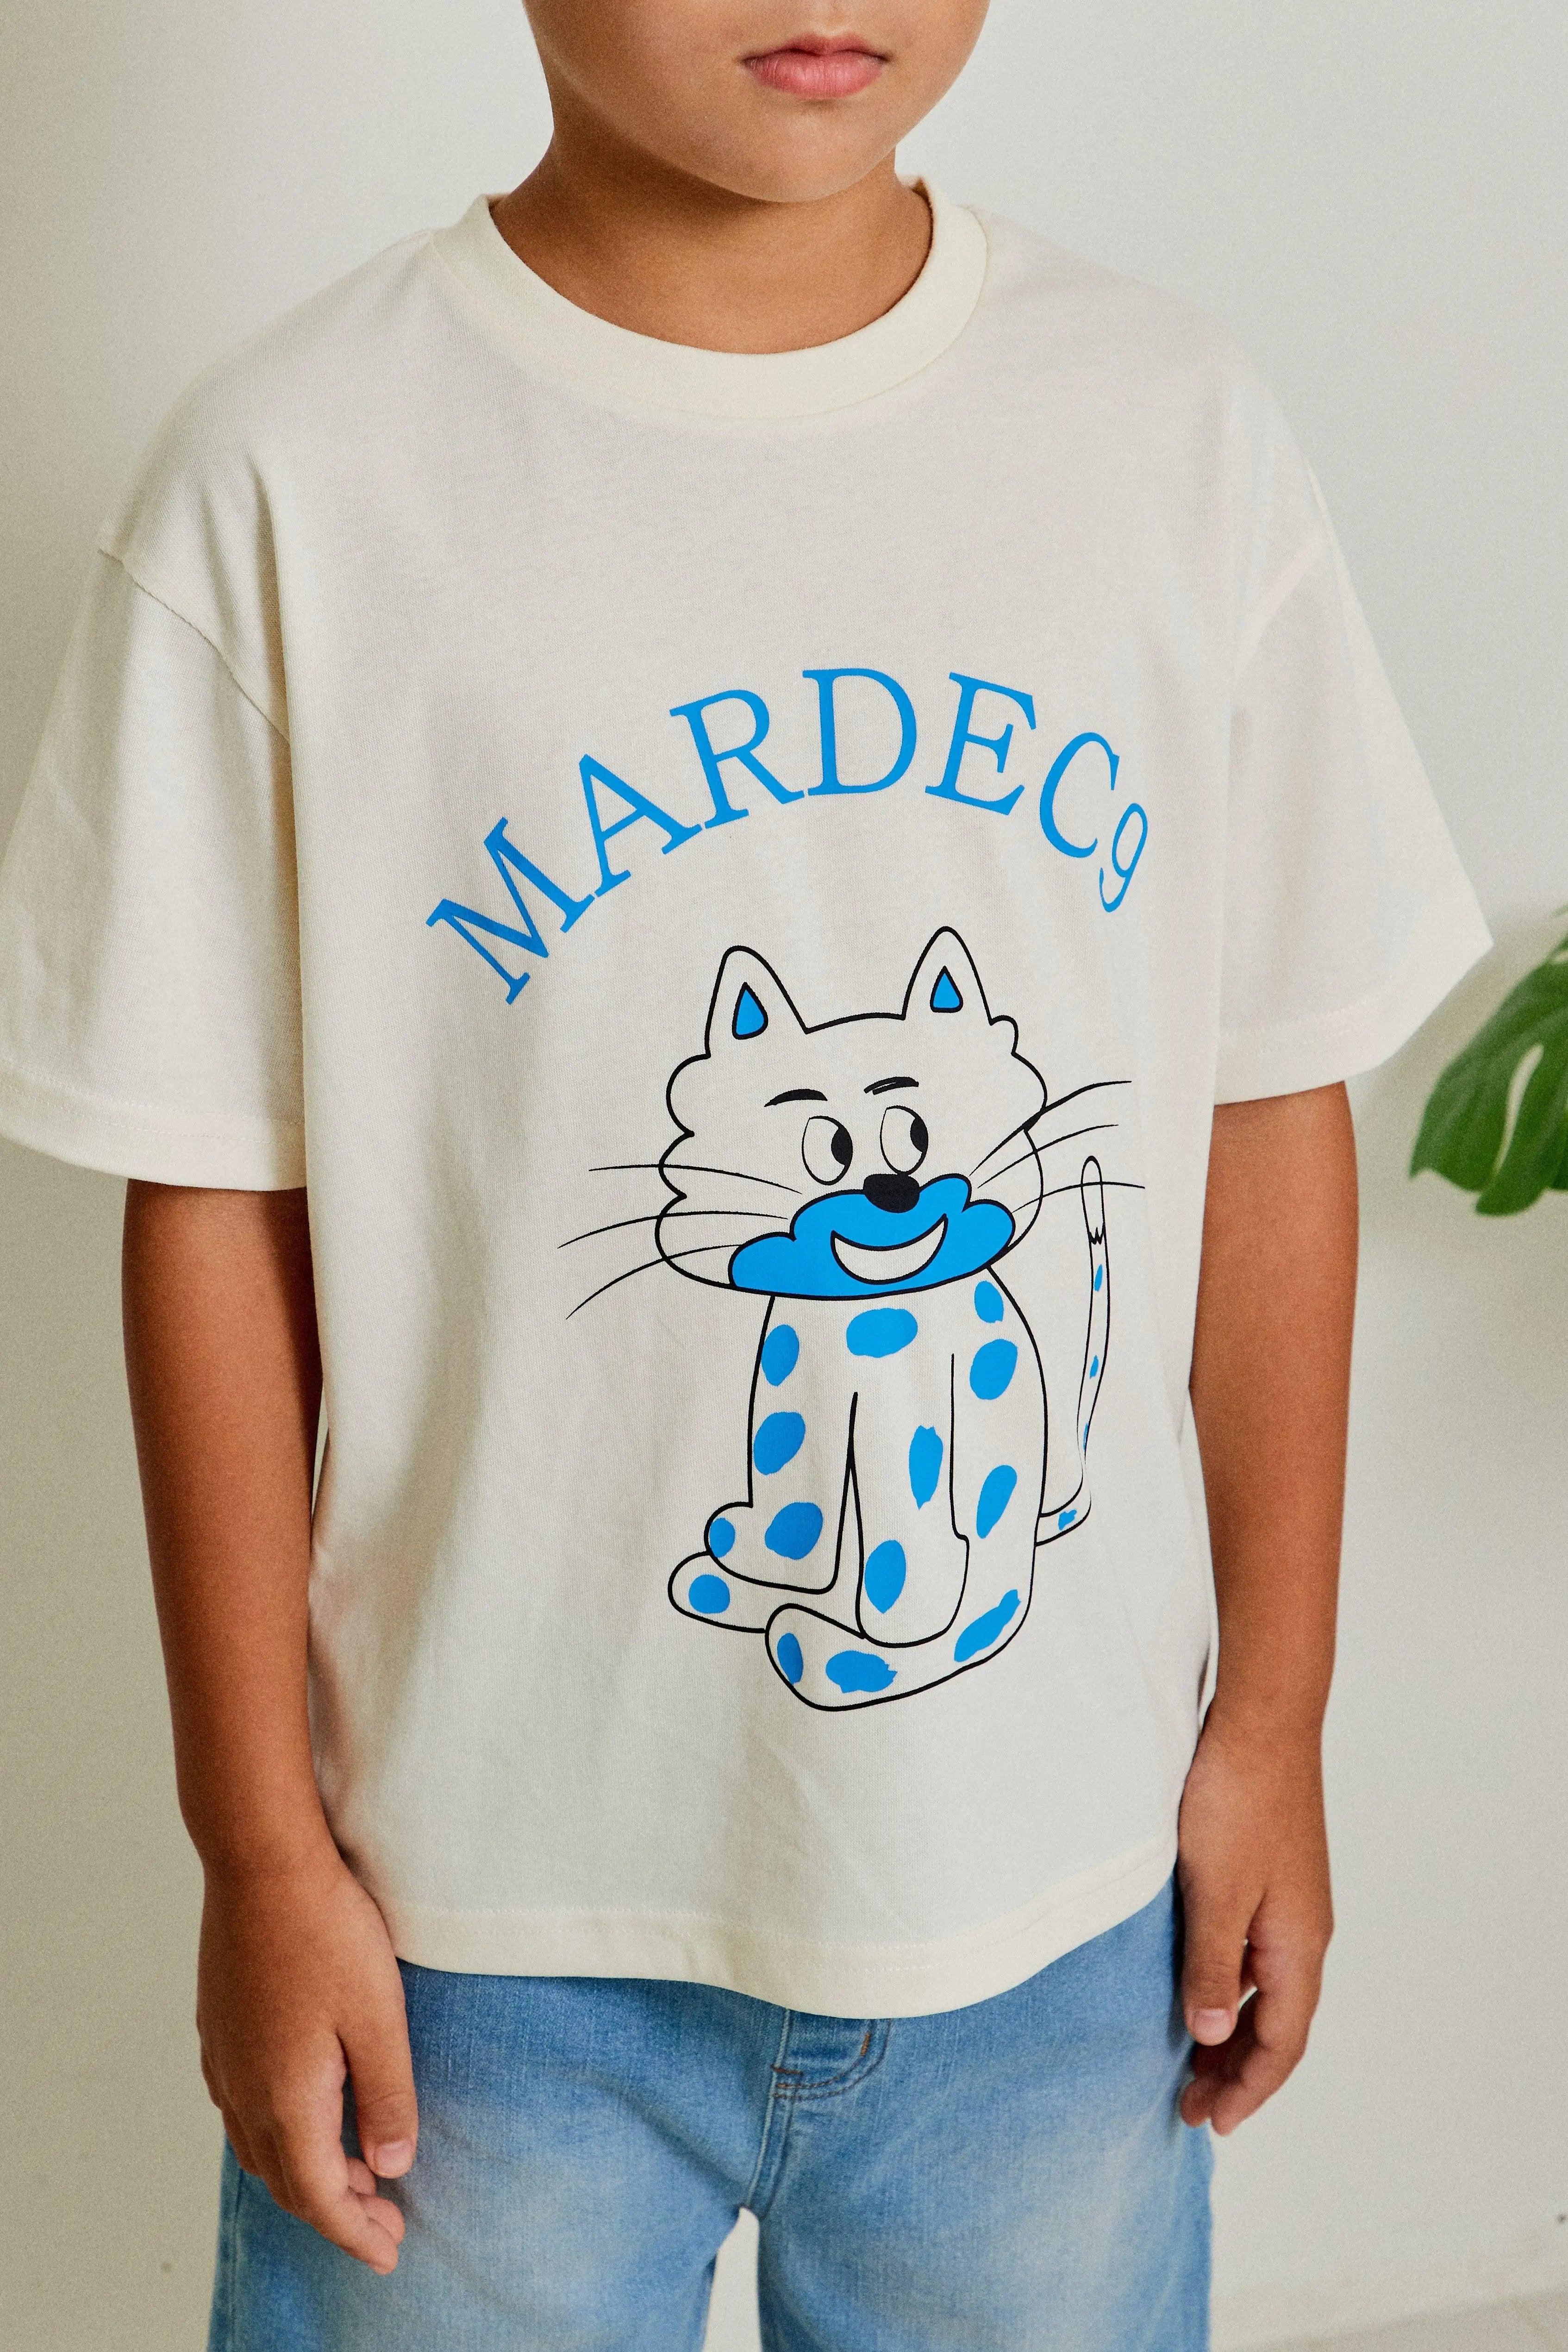 Funny Cat T-shirt Mardec9 Mardec9 Singapore